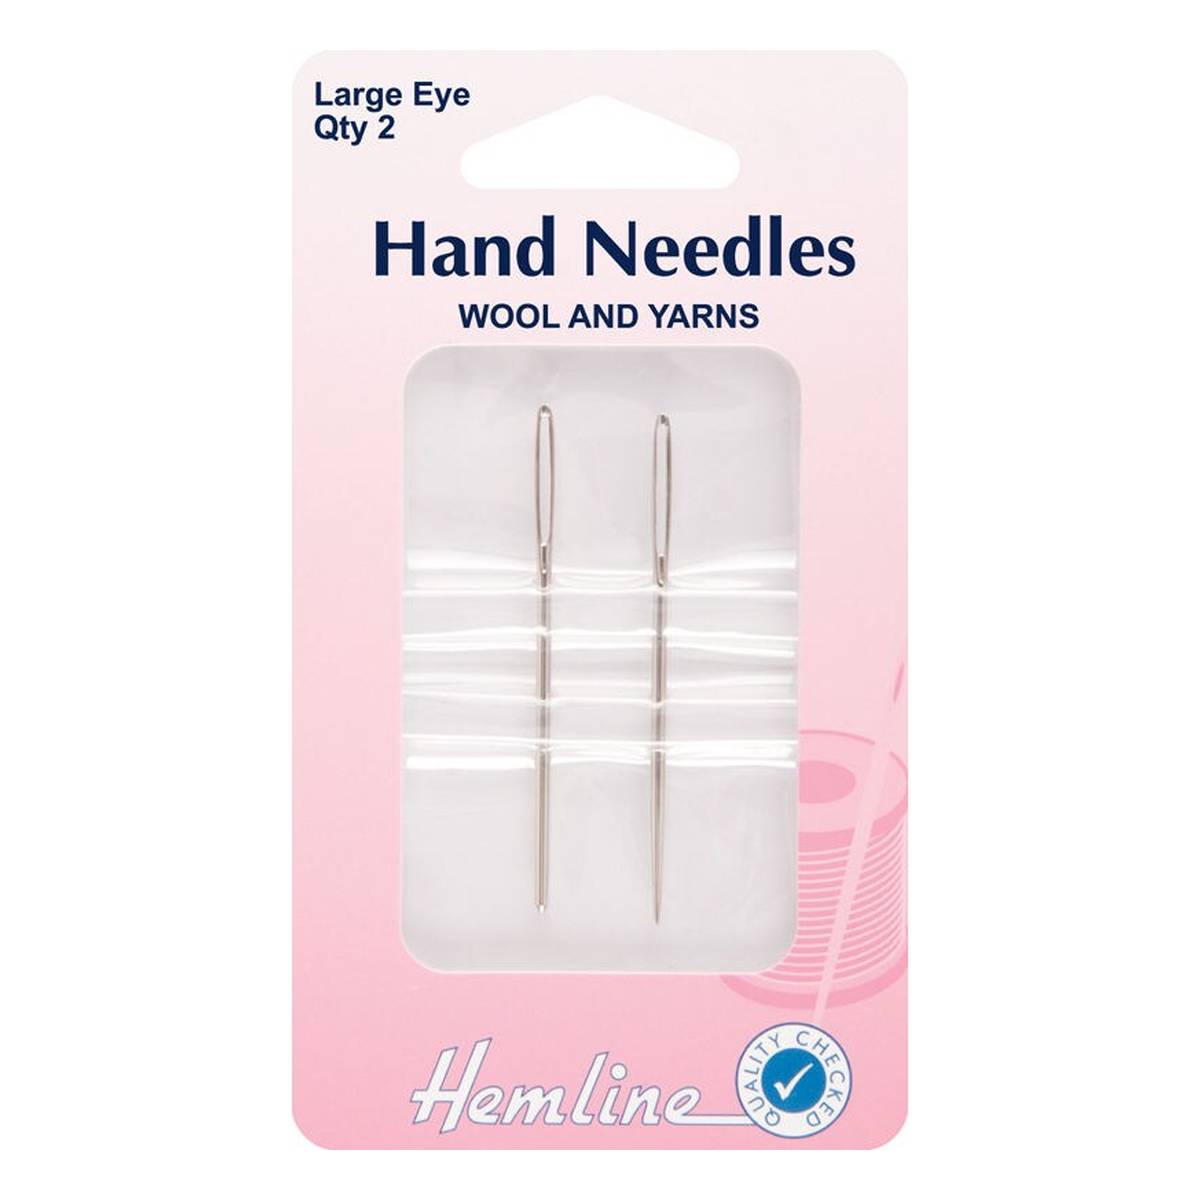 Large Eye Blunt Needle Knitting, Leather Needles Hand Sewing